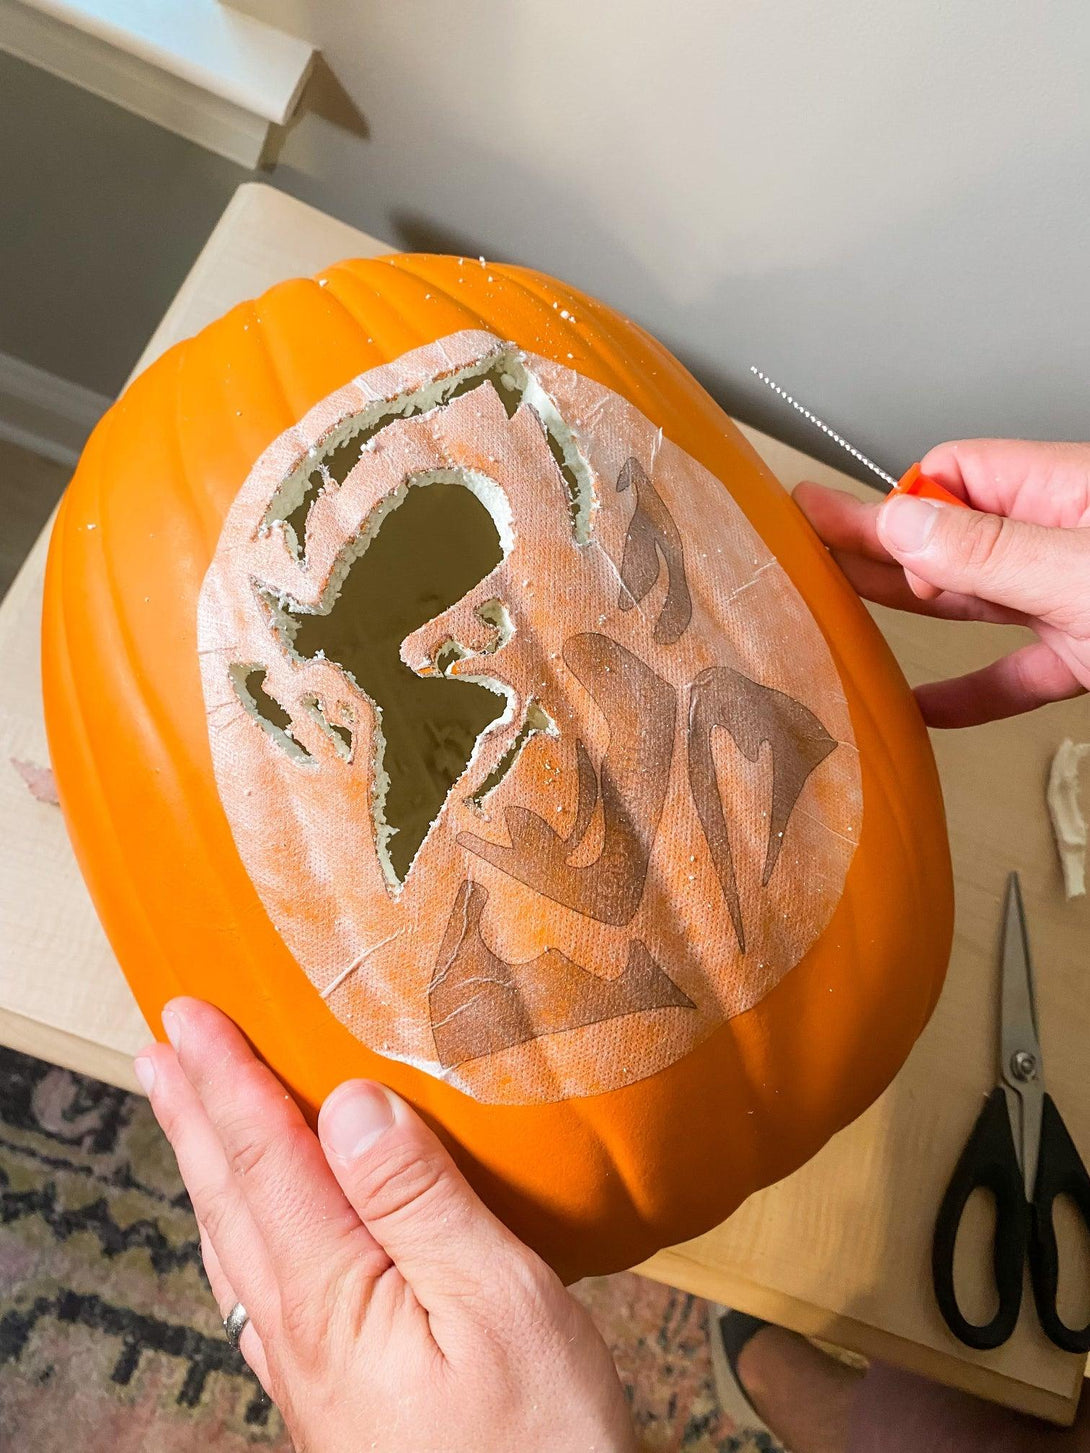 Weary Face Emoji Pumpkin Carving Stencil - Pumpkin HQ